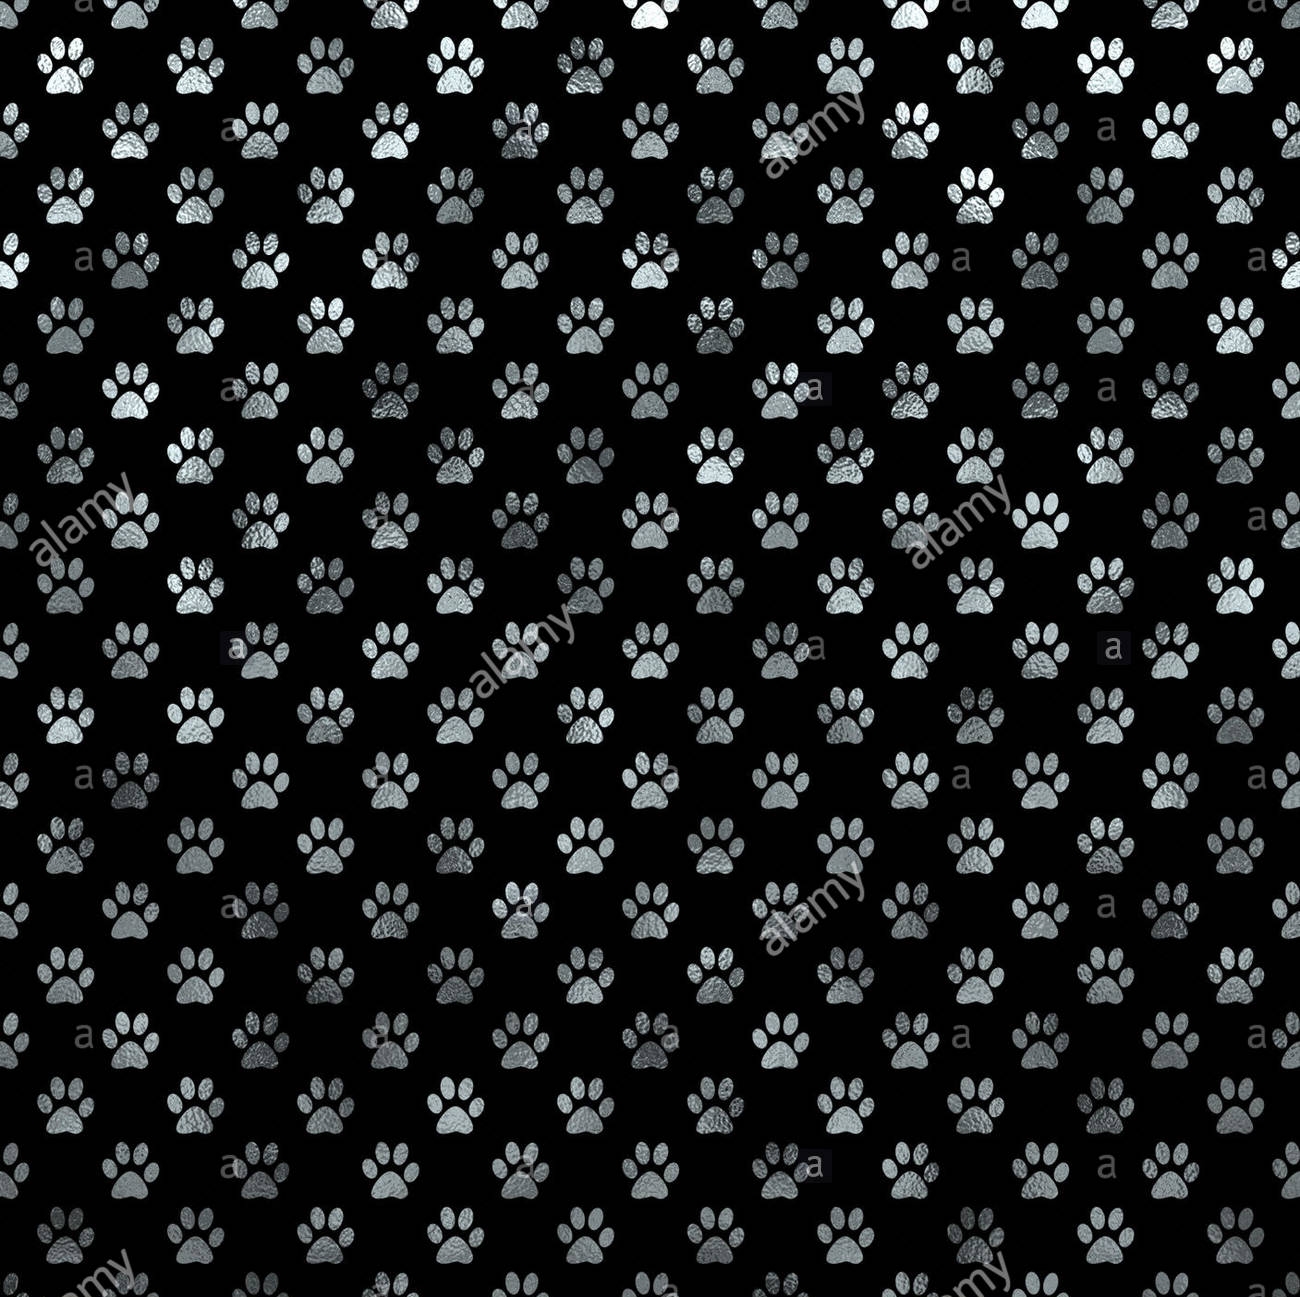 Silver And Black Dog Paws Metallic Foil Polka Dot Texture